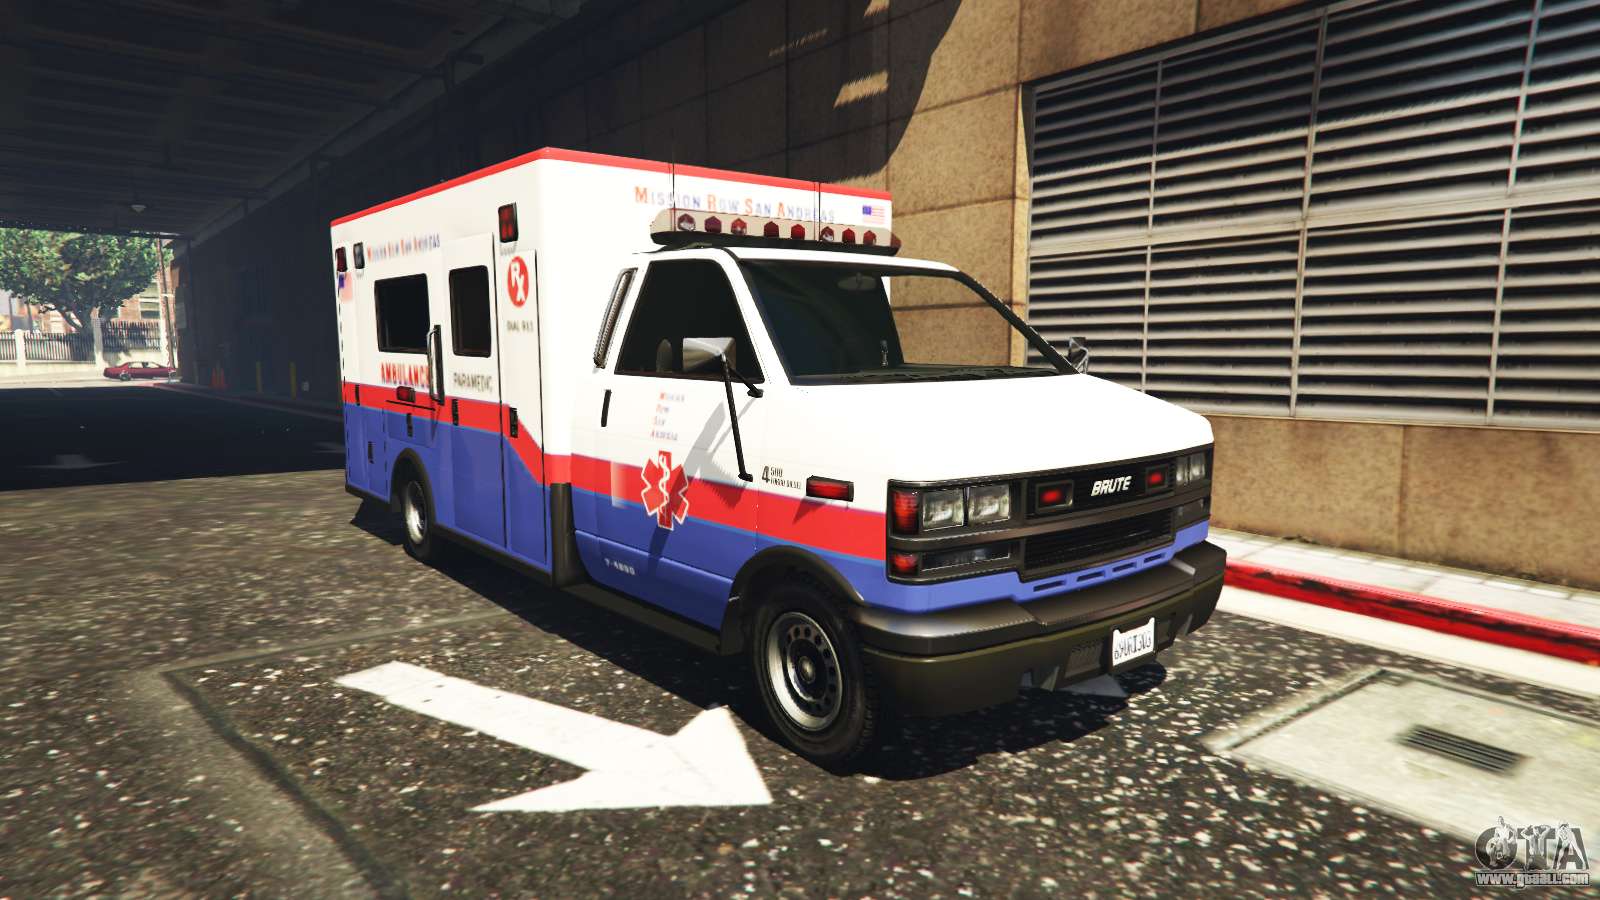 Ambulance v0.7.2 for GTA 5